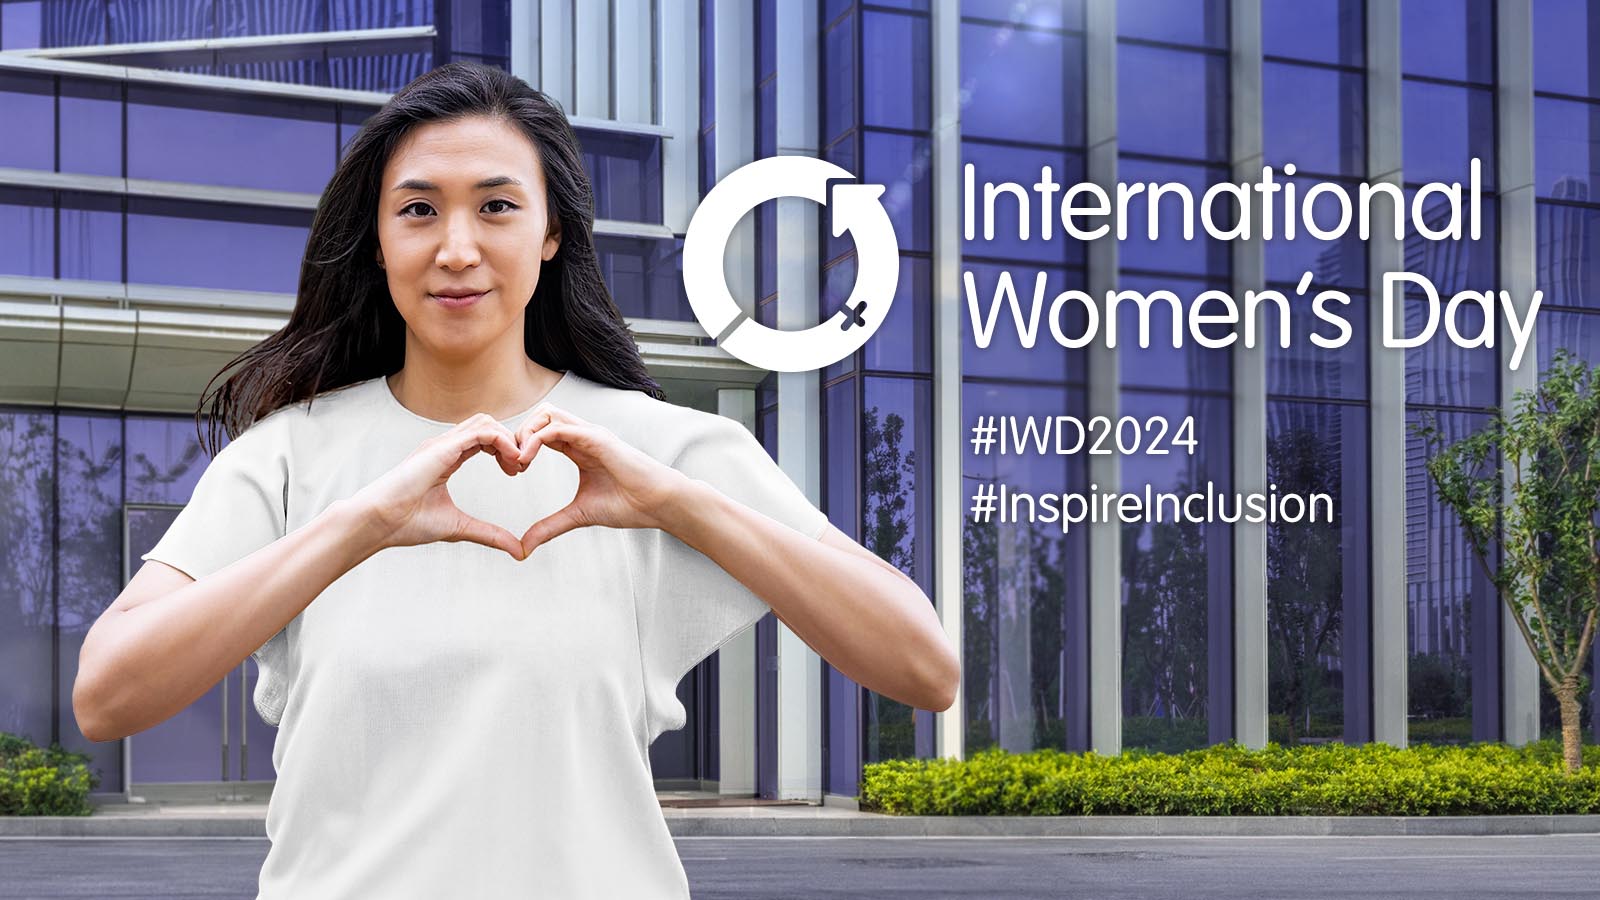 GLUK joins the World in marking International Women’s Day 2024